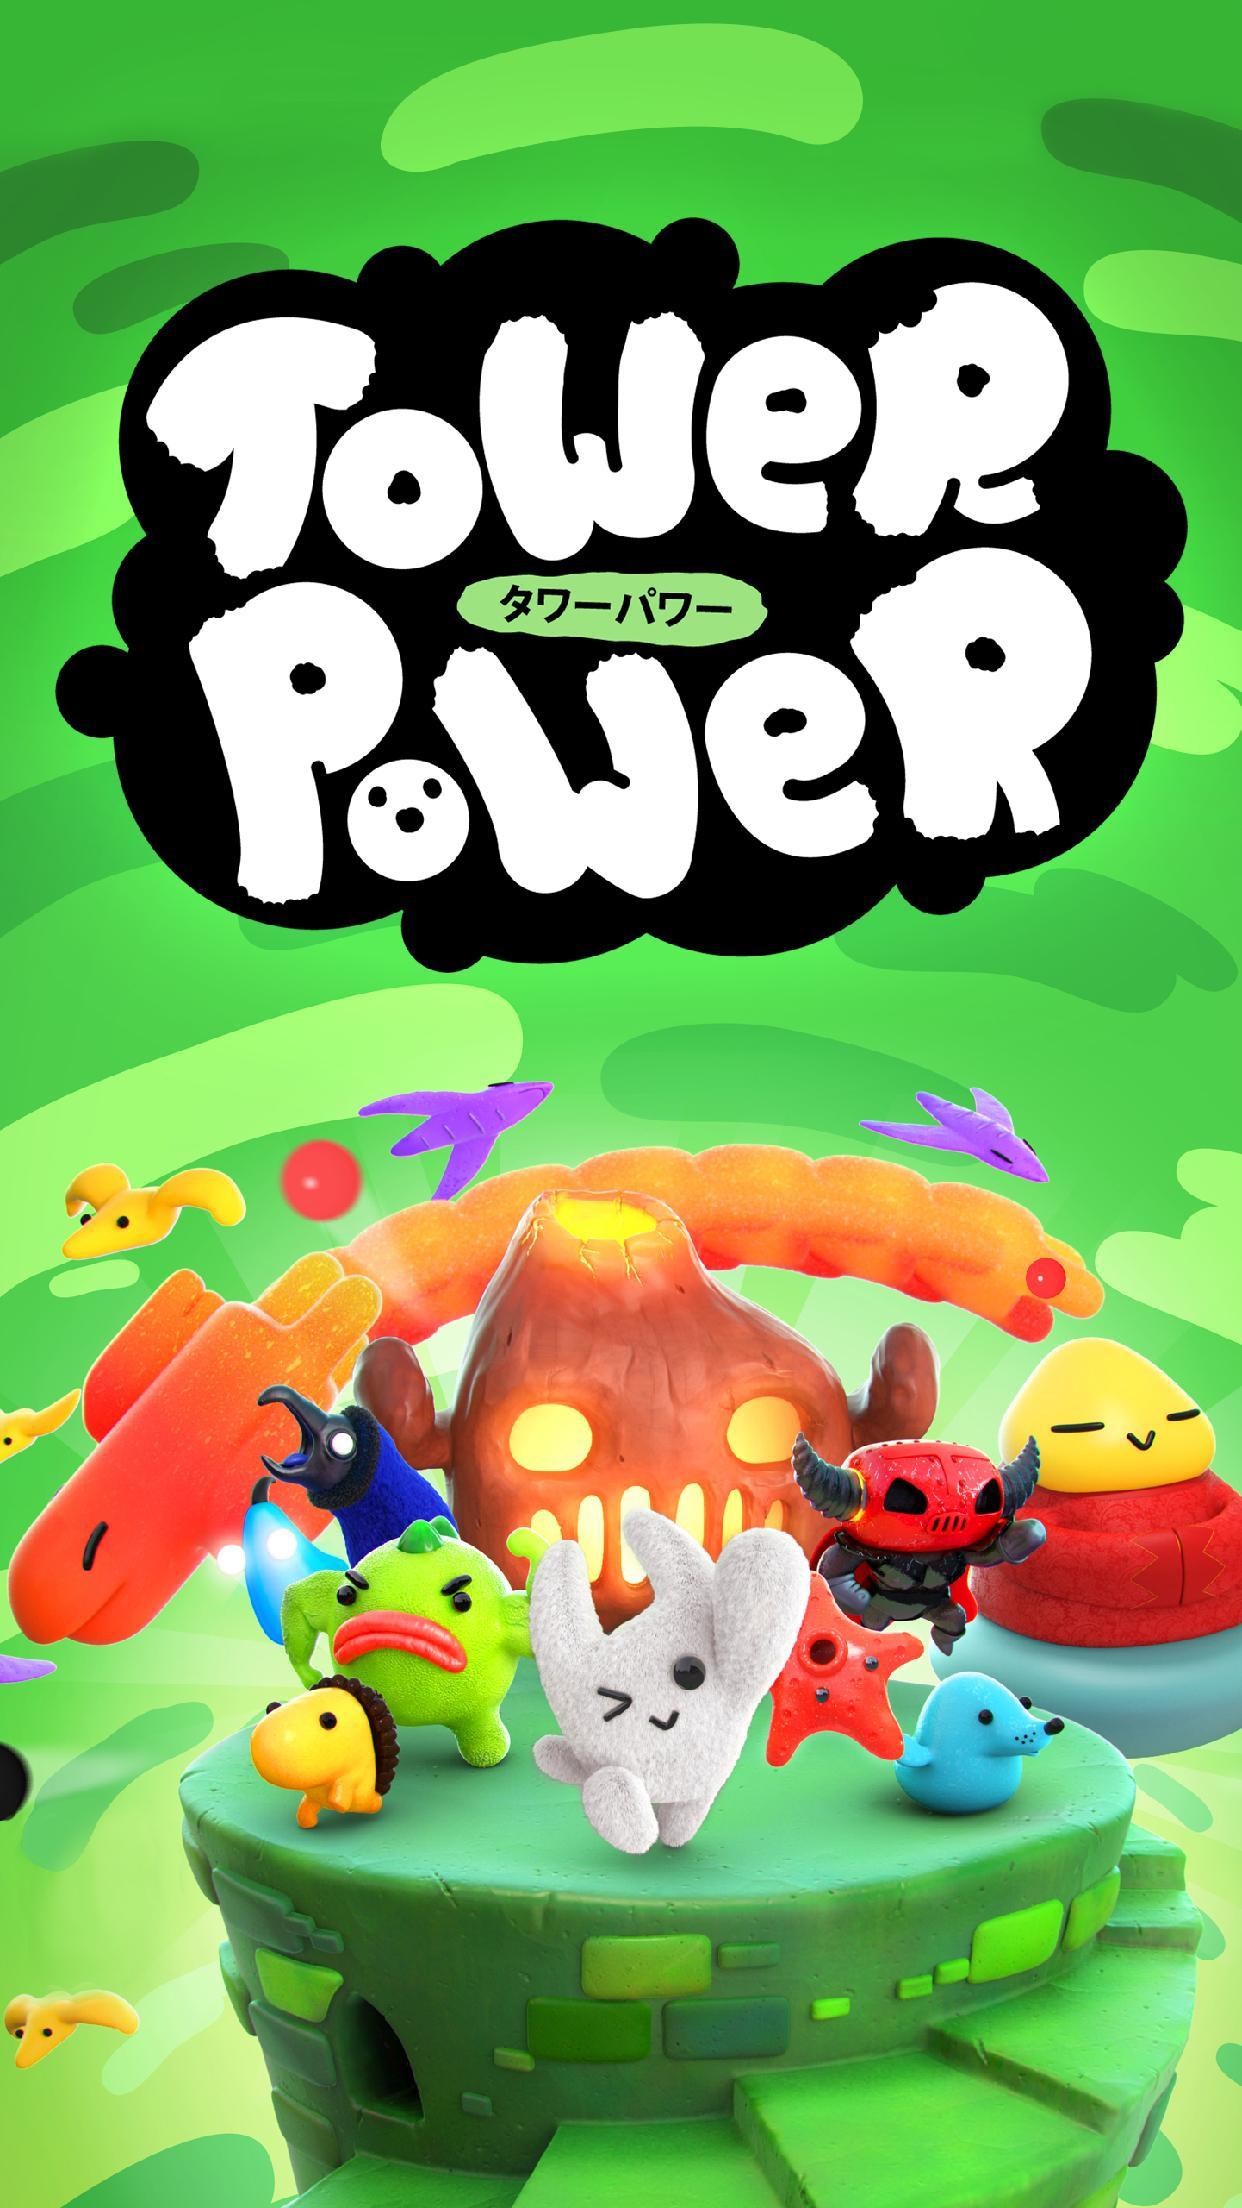 Screenshot 1 of Tower Power (Unreleased) 1.0.0